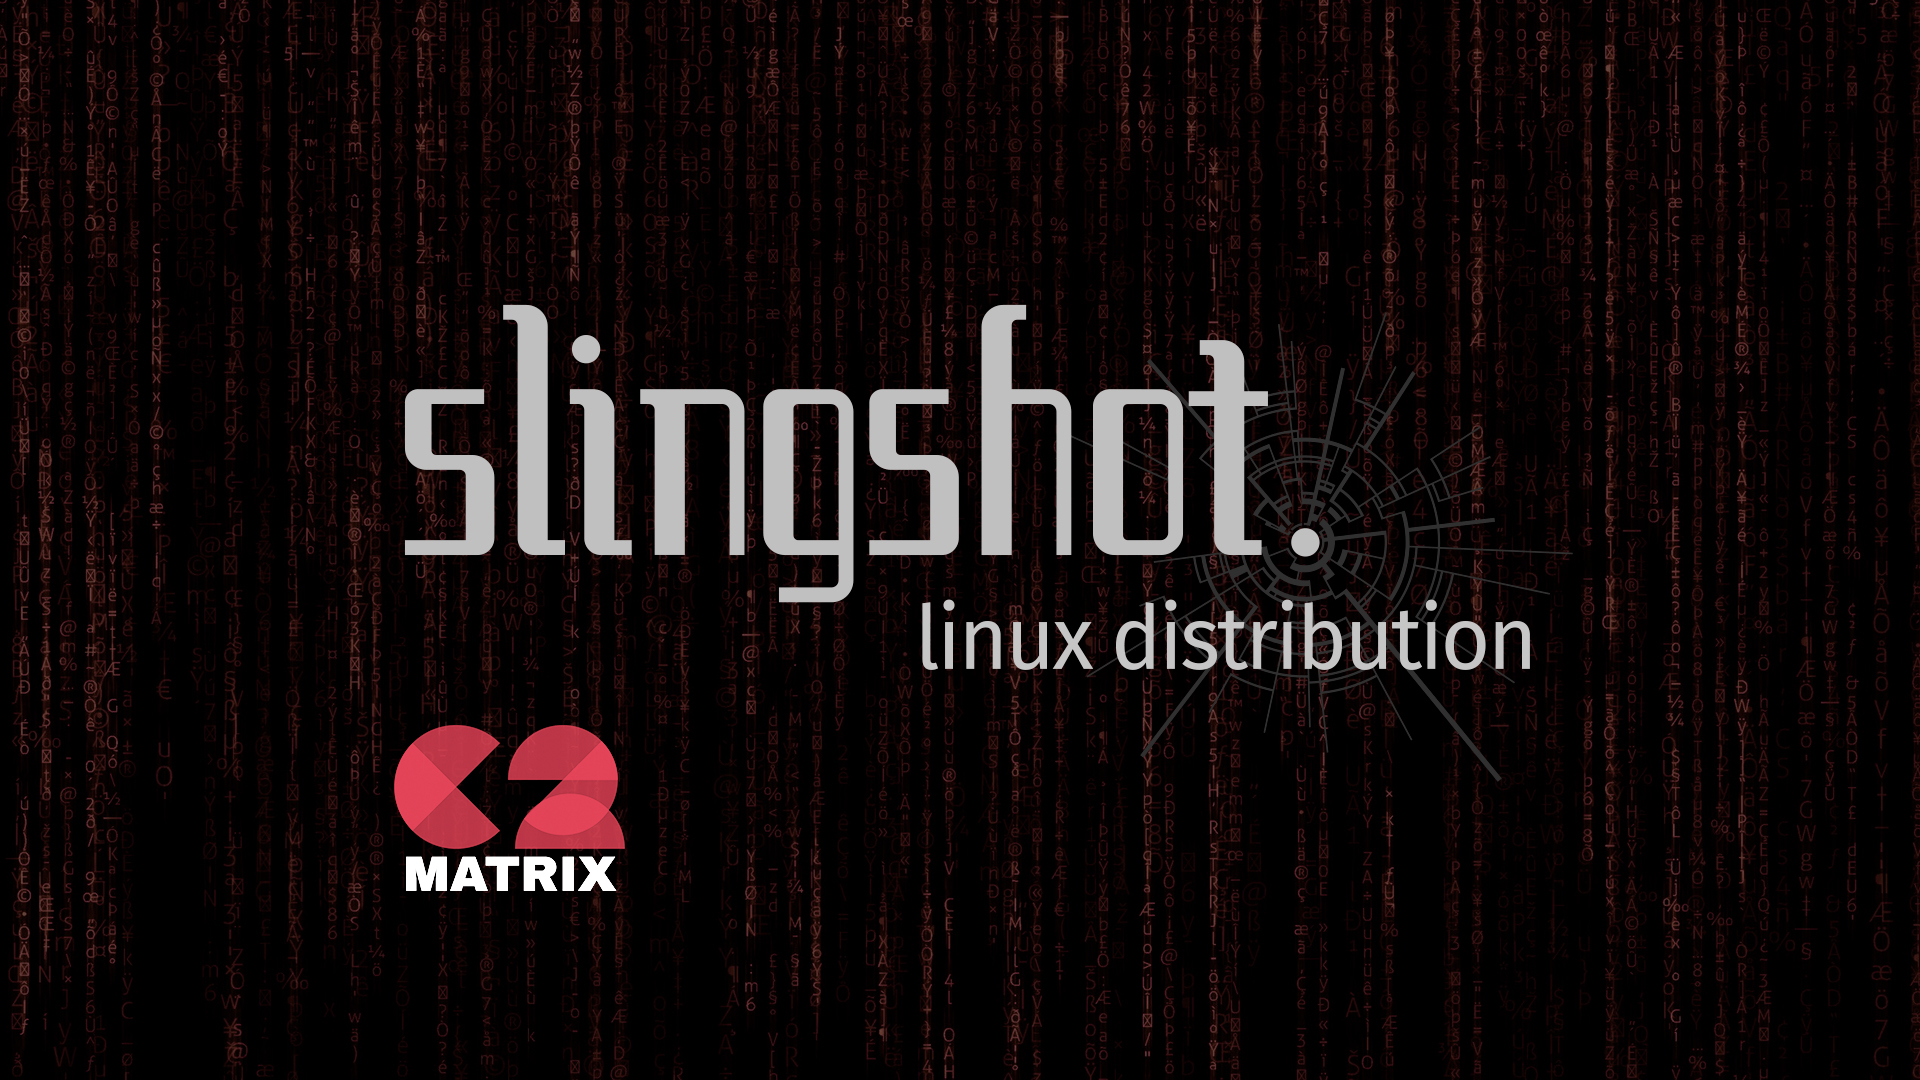 From Moonshot to Slingshot (C2 Matrix Edition)